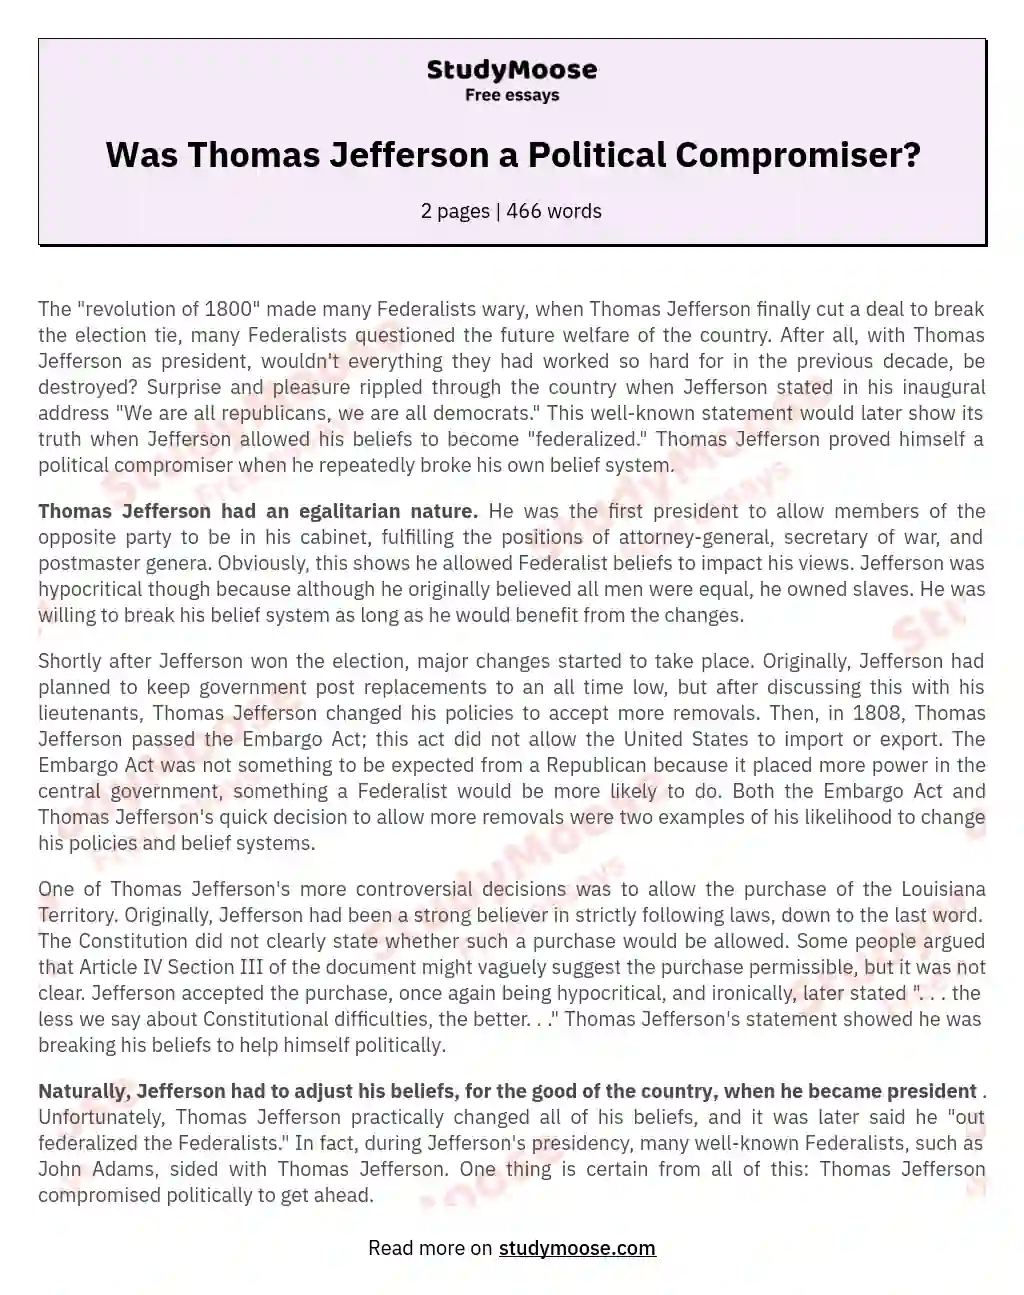 Was Thomas Jefferson a Political Compromiser? essay